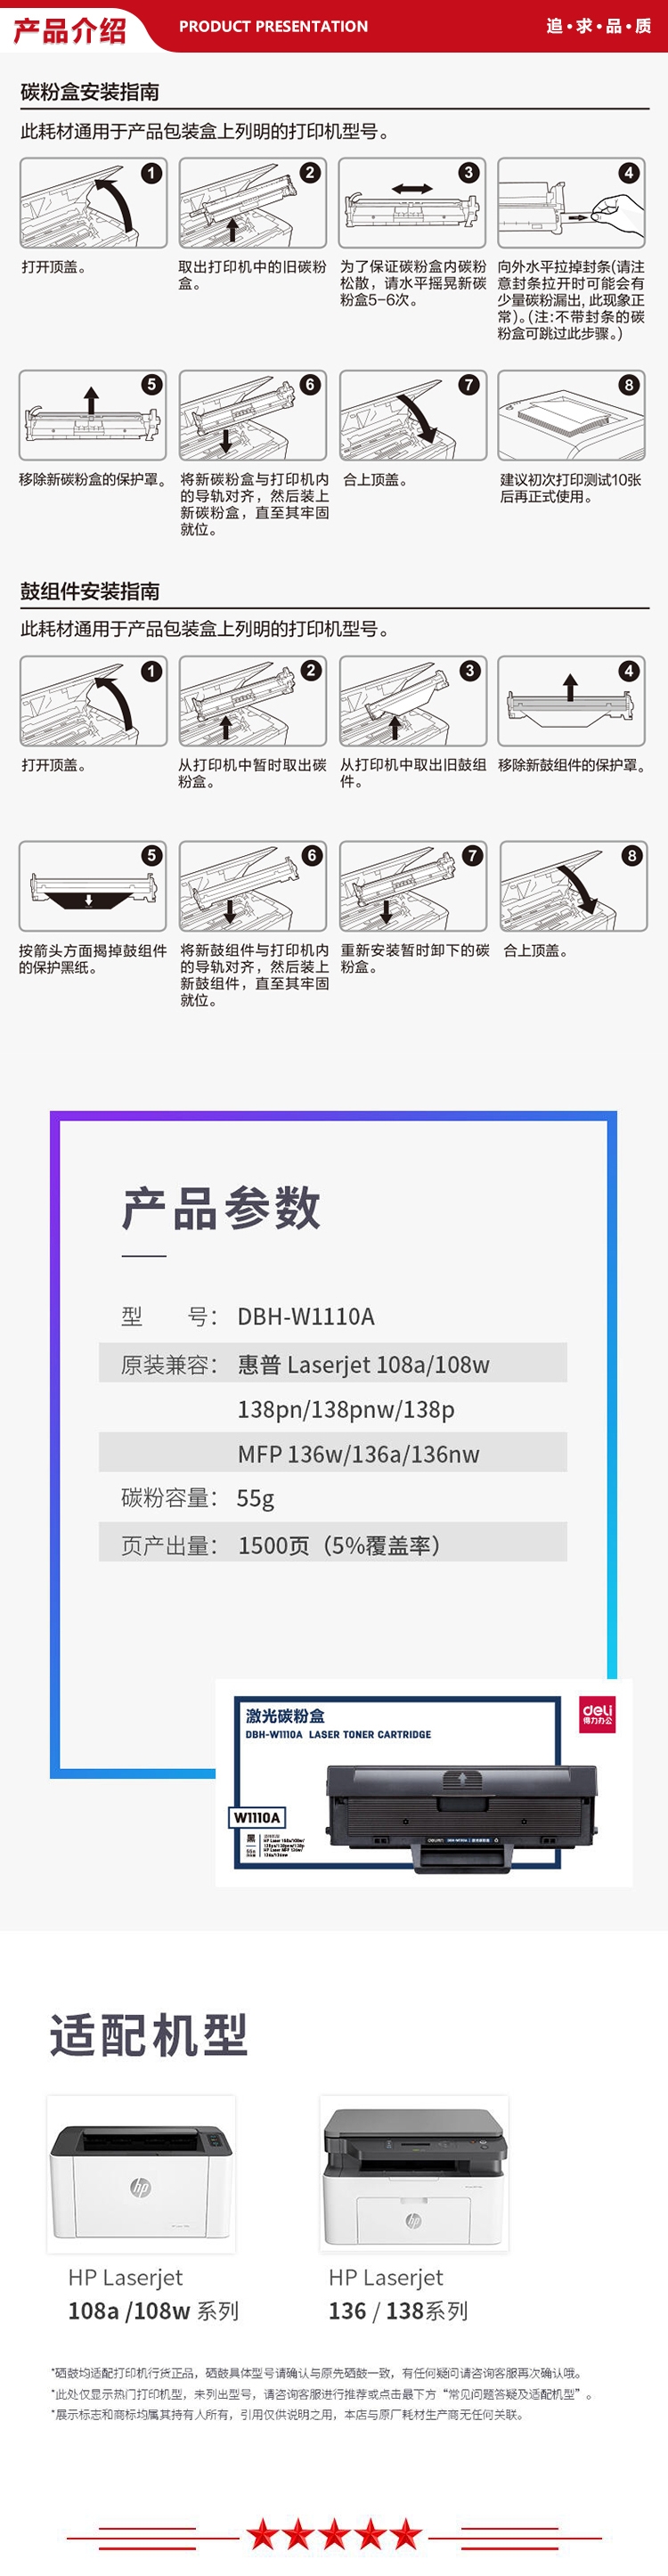 DBH-W1110A-.jpg